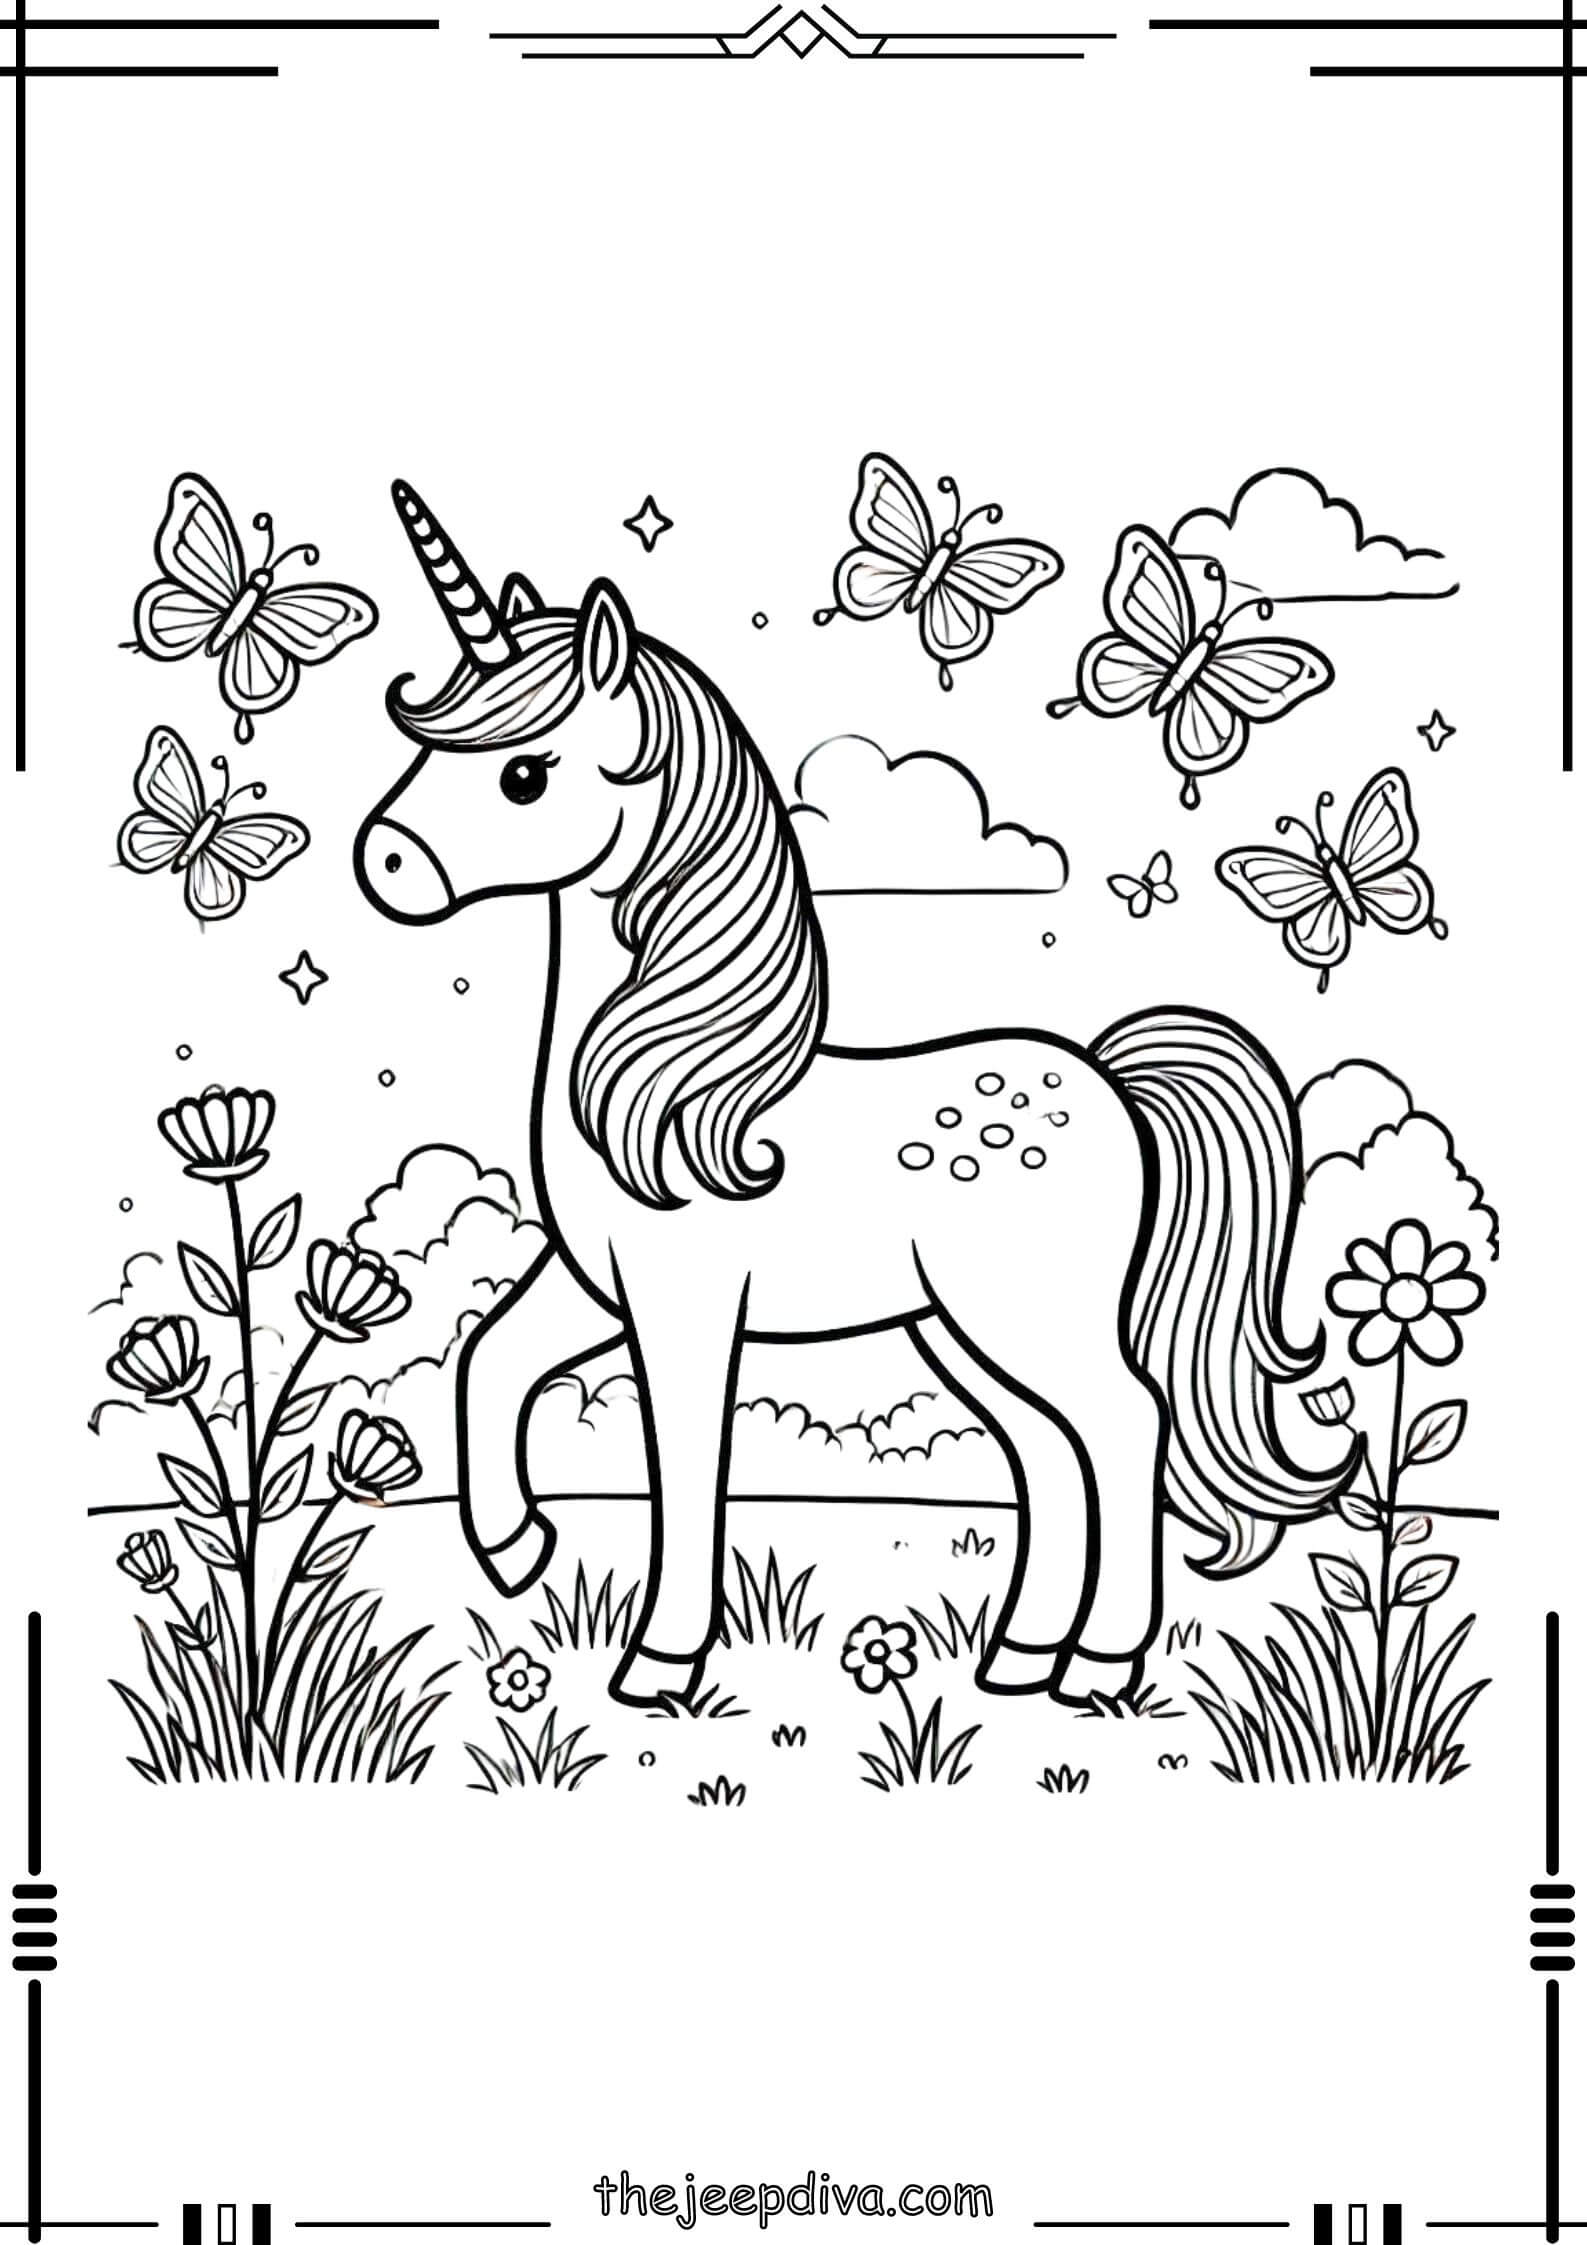 unicorn-coloring-page-medium-16